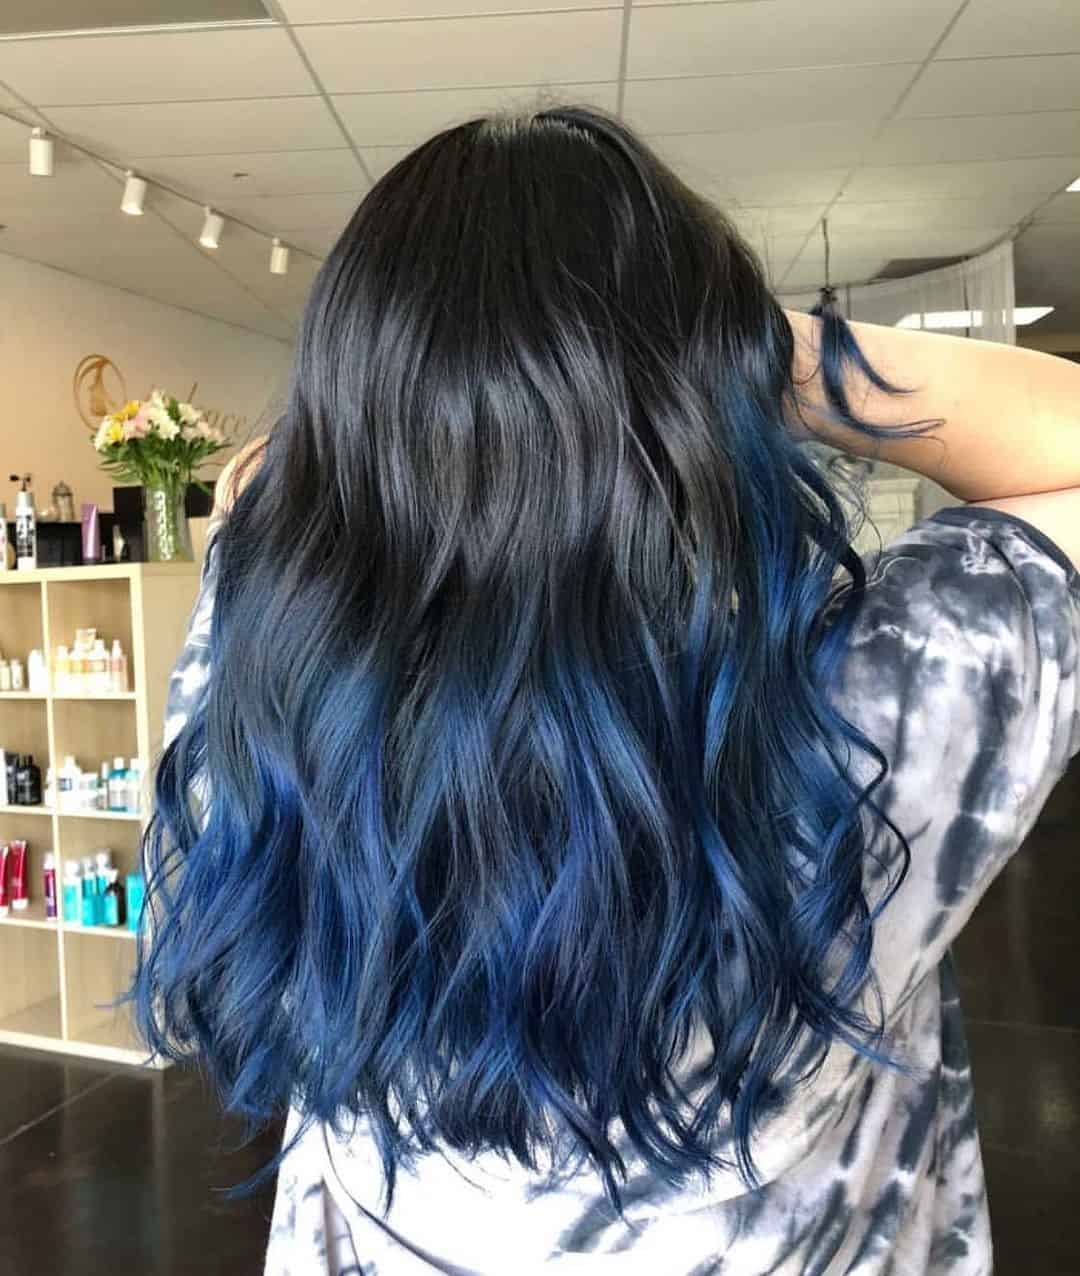 Hollywood Waves Black And Blue Hair 